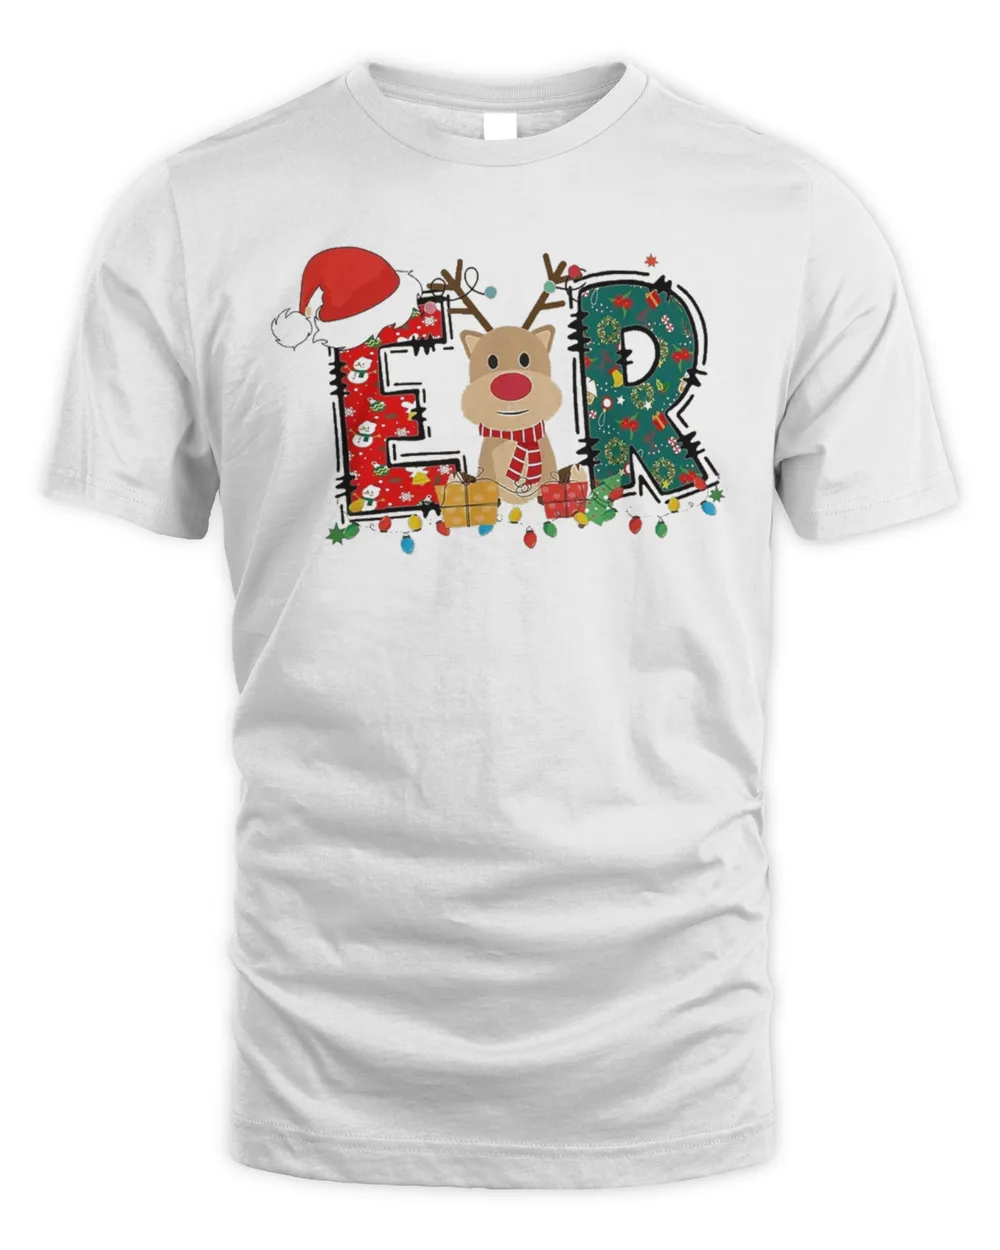 Christmas ER Nurse Shirt, Emergency Department Xmas Shirt, Emergency Room Staff Shirt Unisex Standard T-Shirt white xl